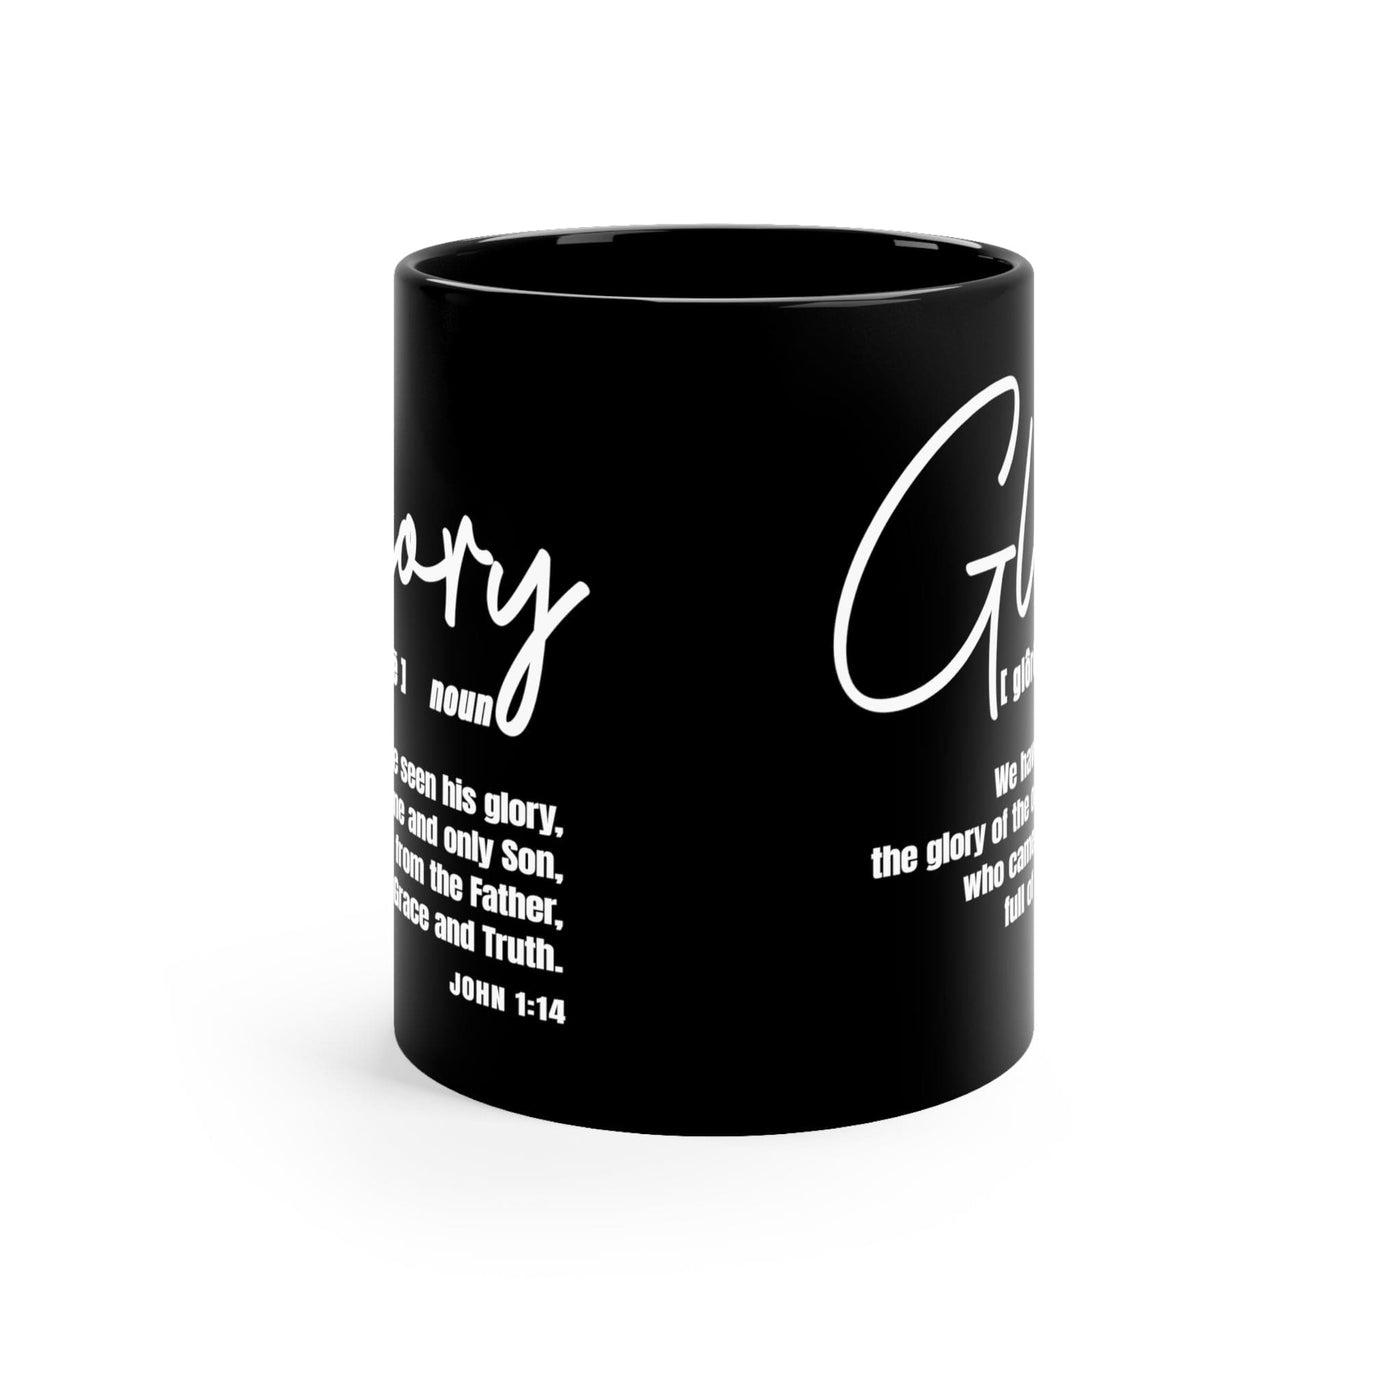 Black Ceramic Mug - 11oz Glory Christian Inspiration Decorative | Mugs